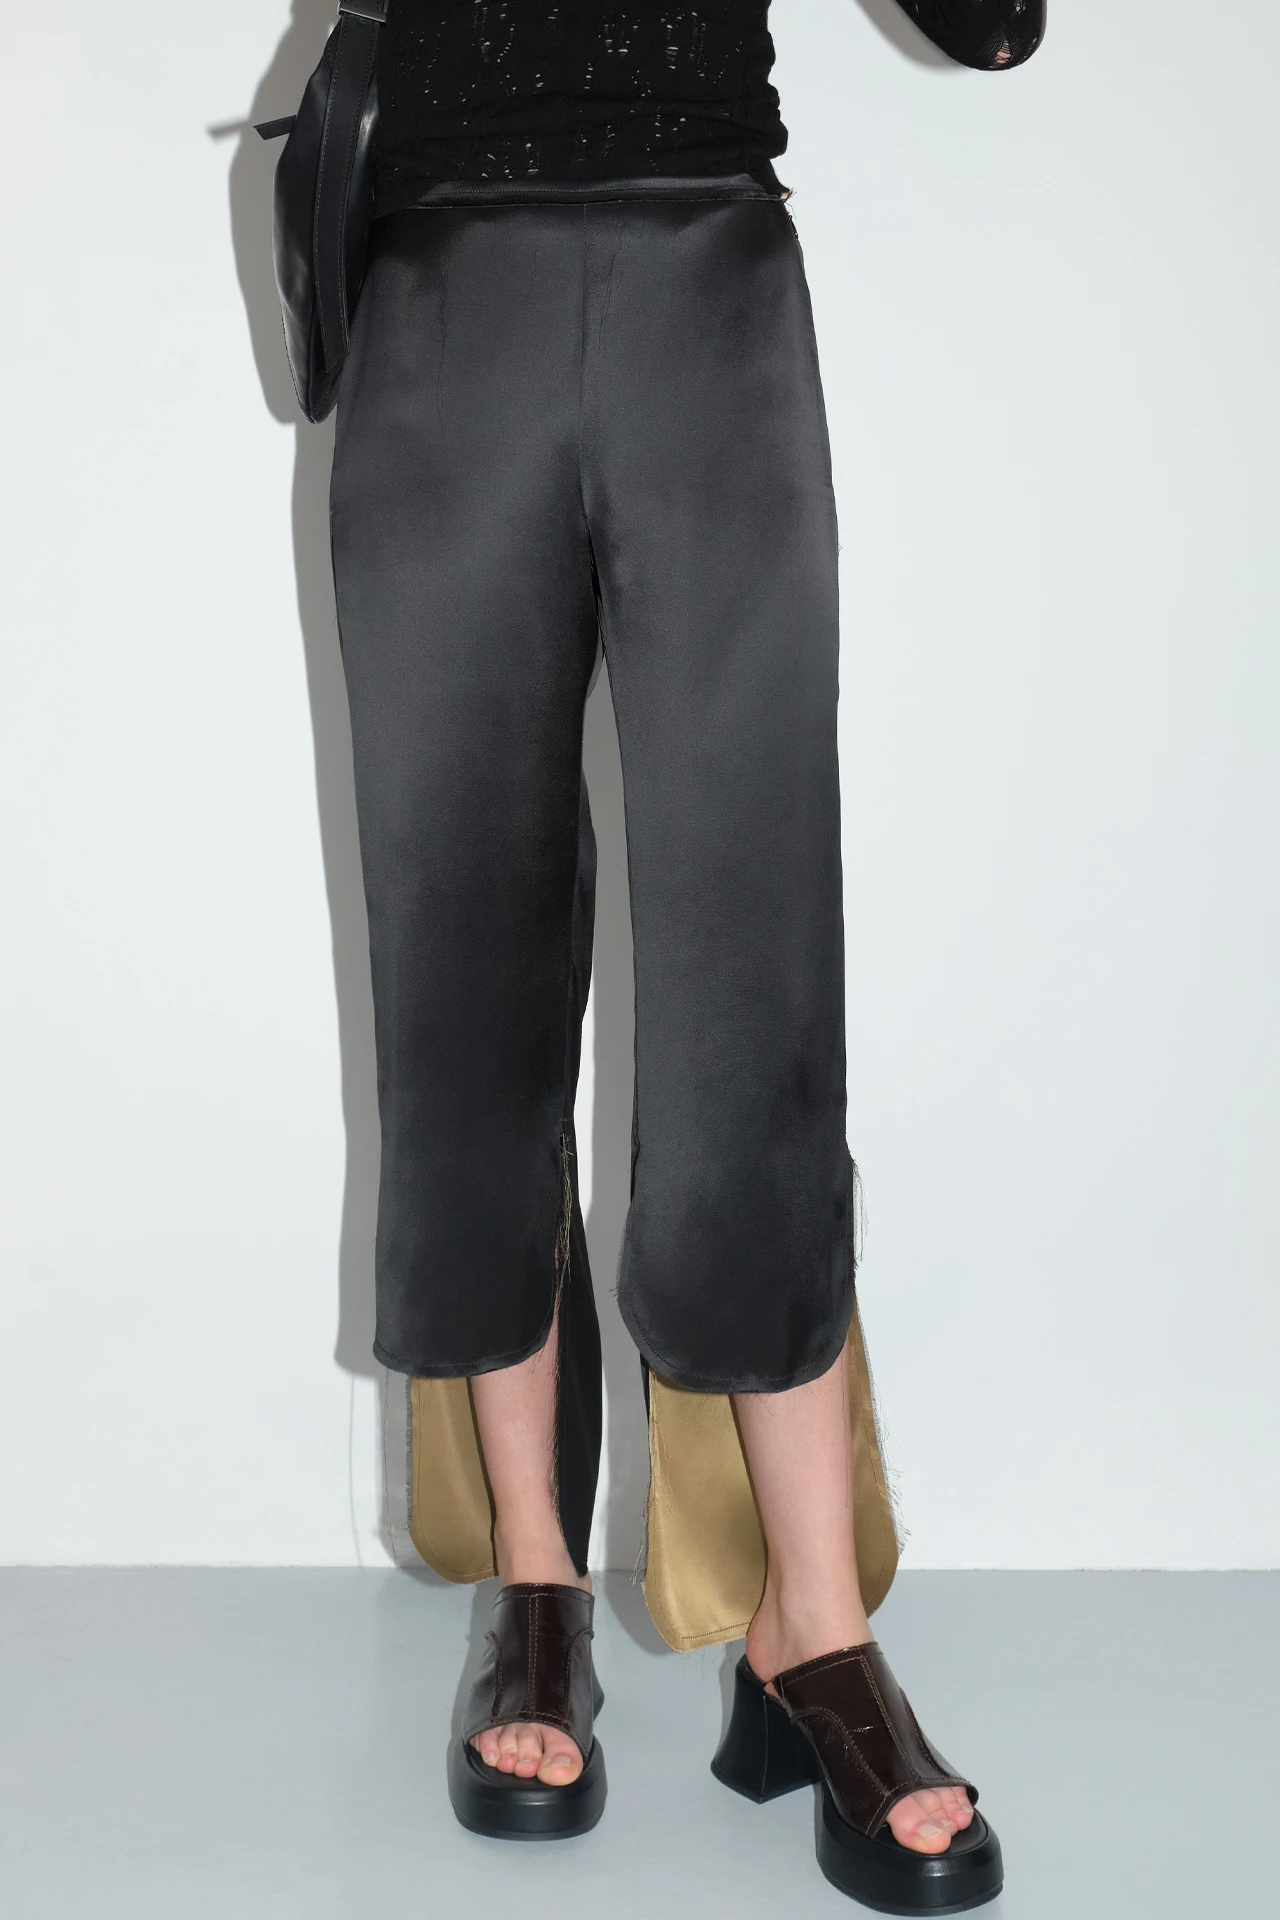 EC-miista-ball-black-beige-trousers-01